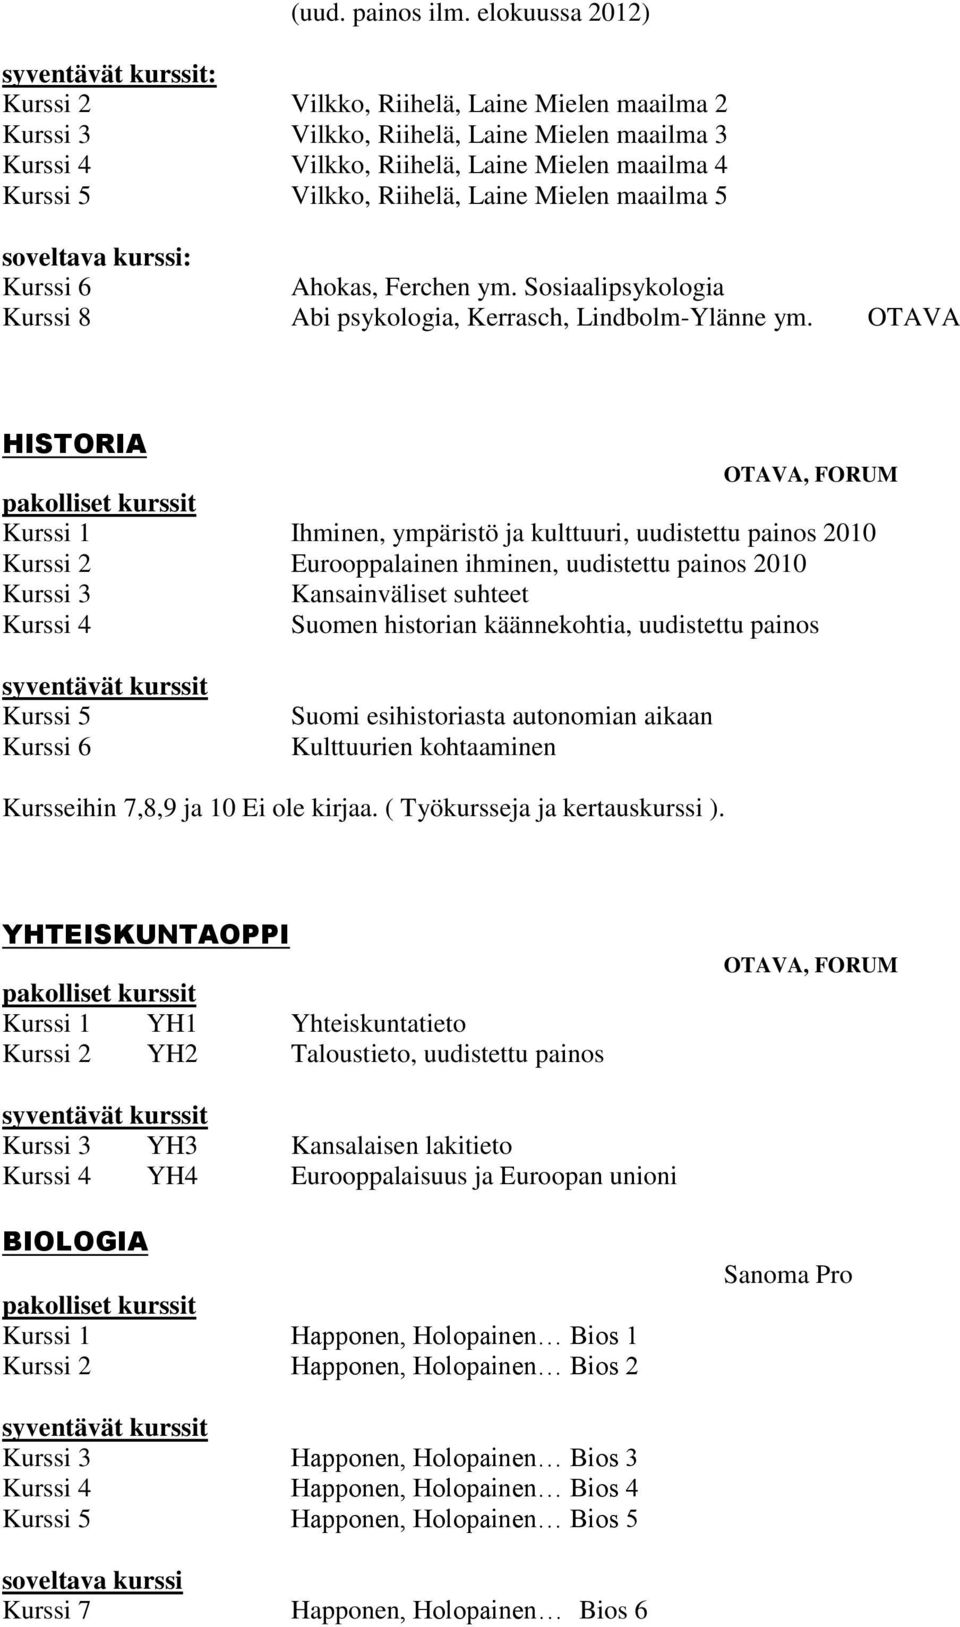 Ahokas, Ferchen ym. Sosiaalipsykologia Kurssi 8 Abi psykologia, Kerrasch, Lindbolm-Ylänne ym.